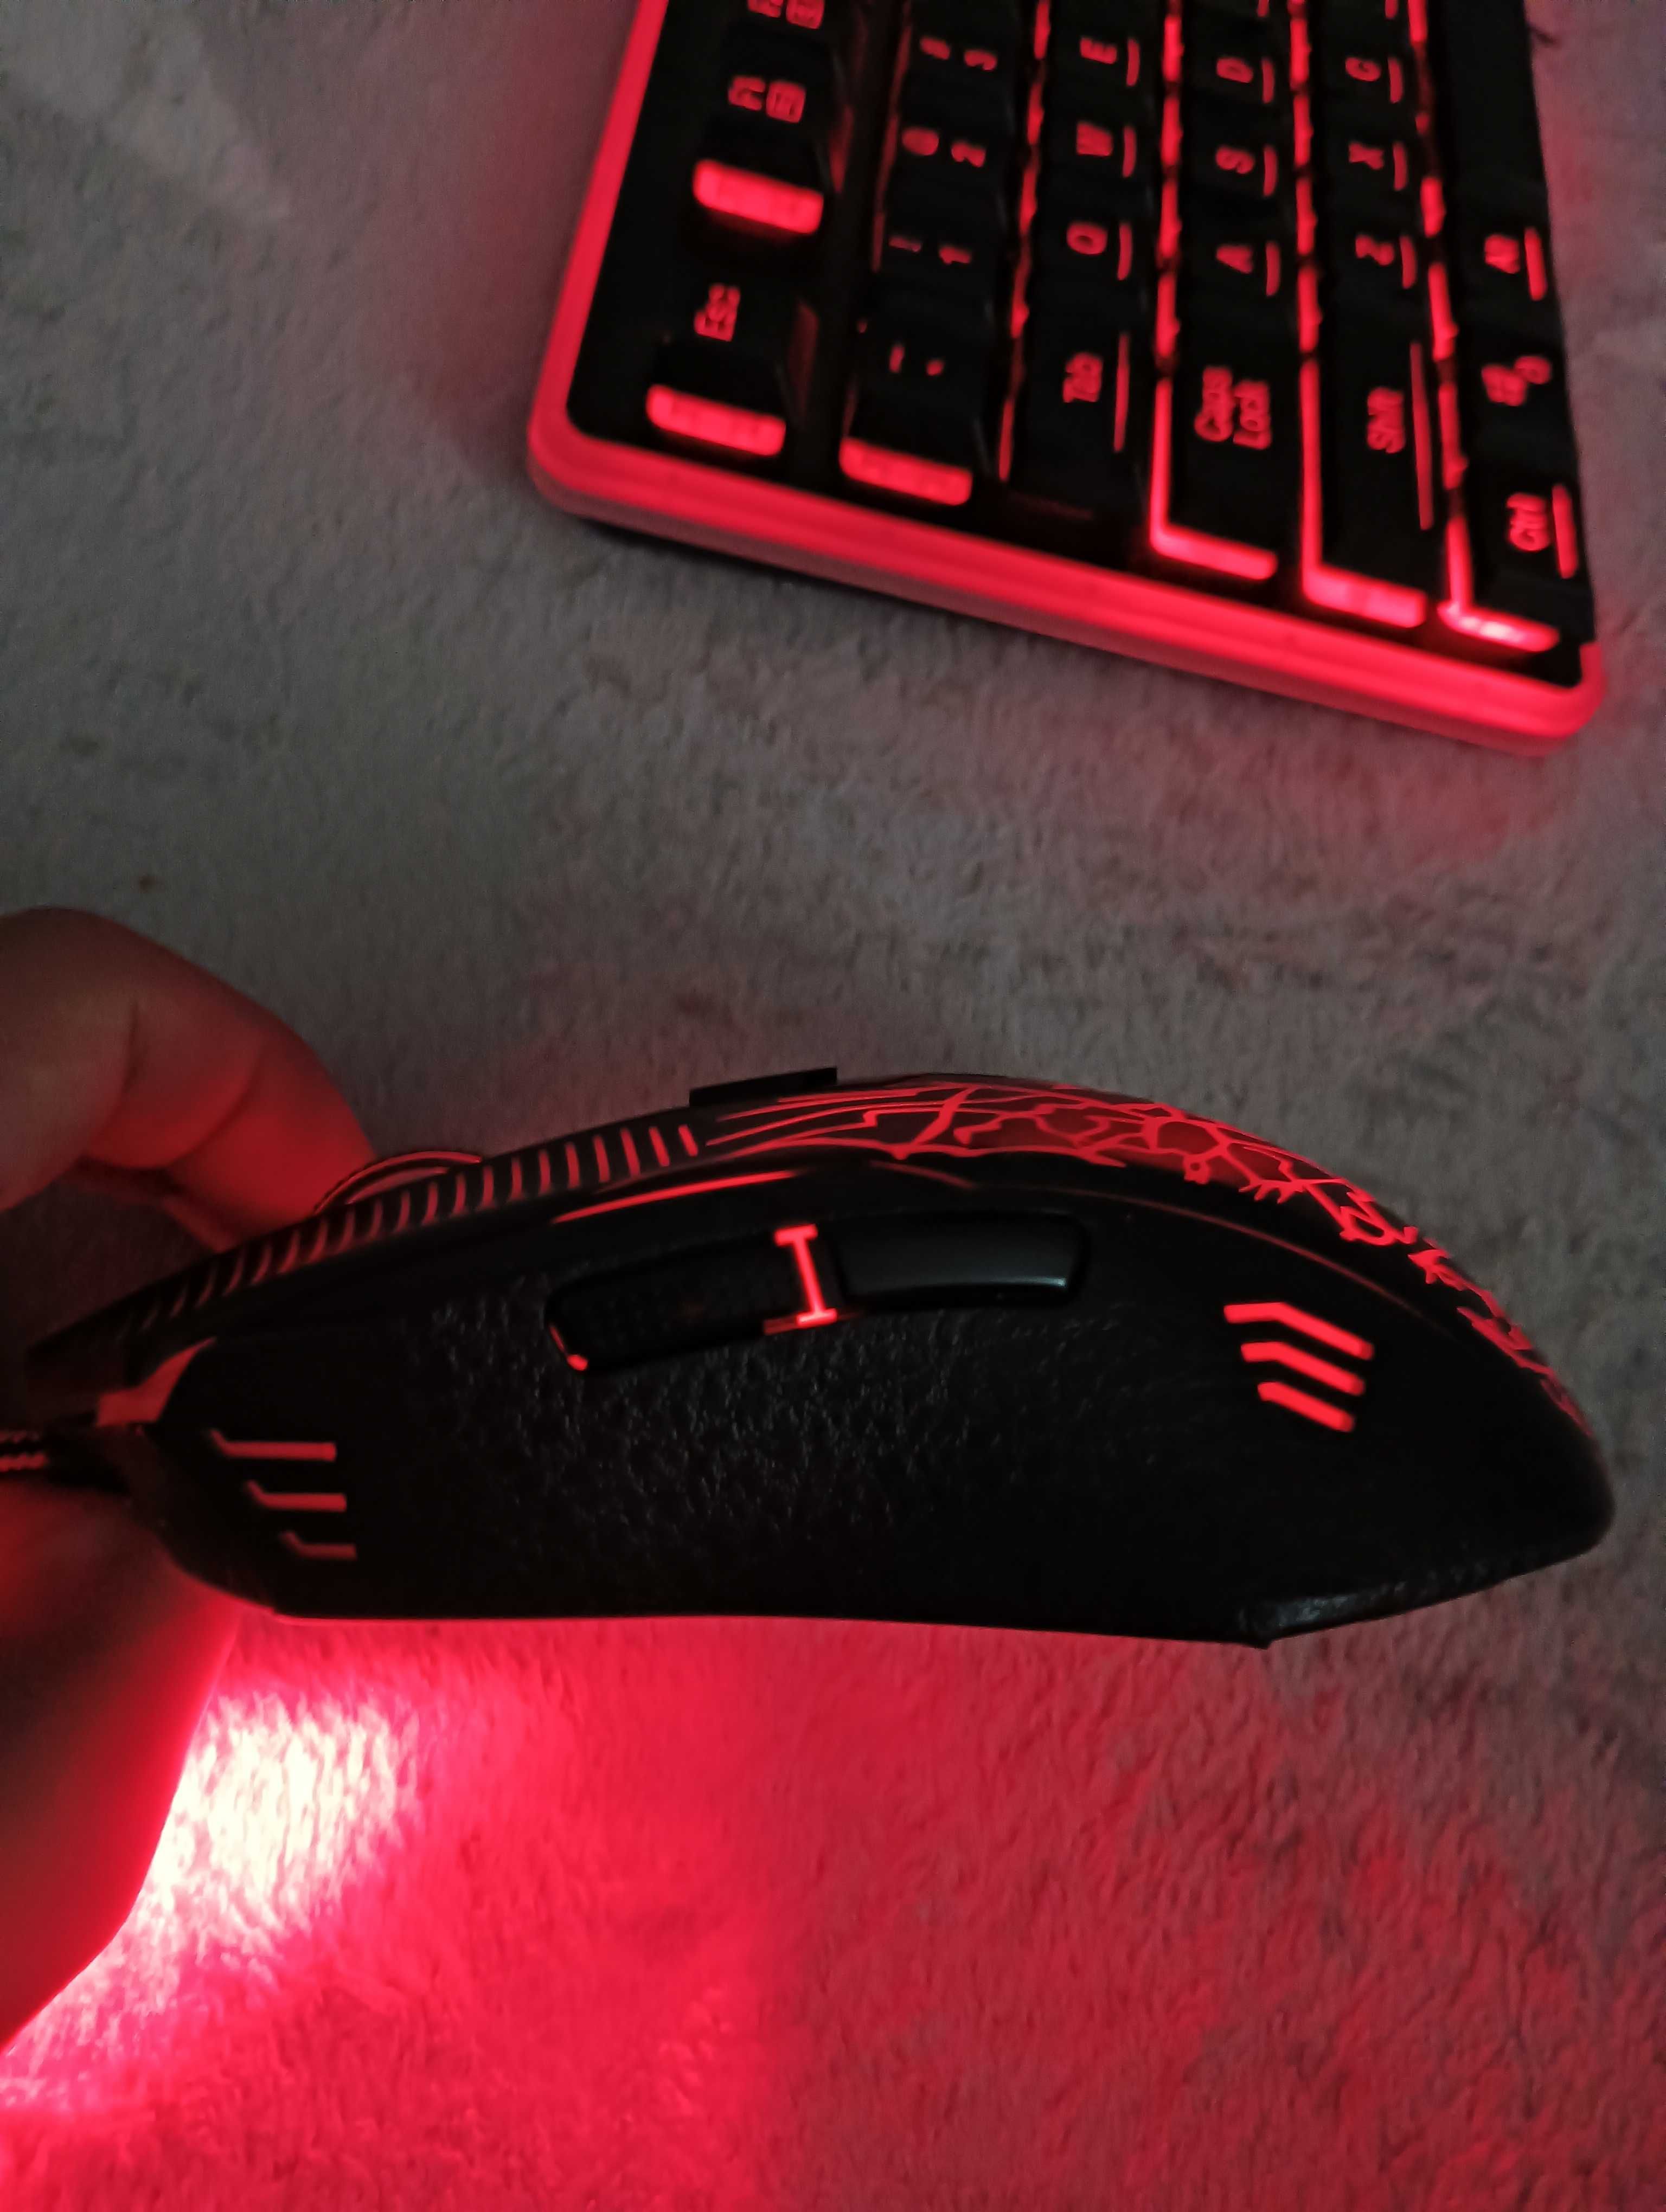 Tastatura și mouse Red dragon